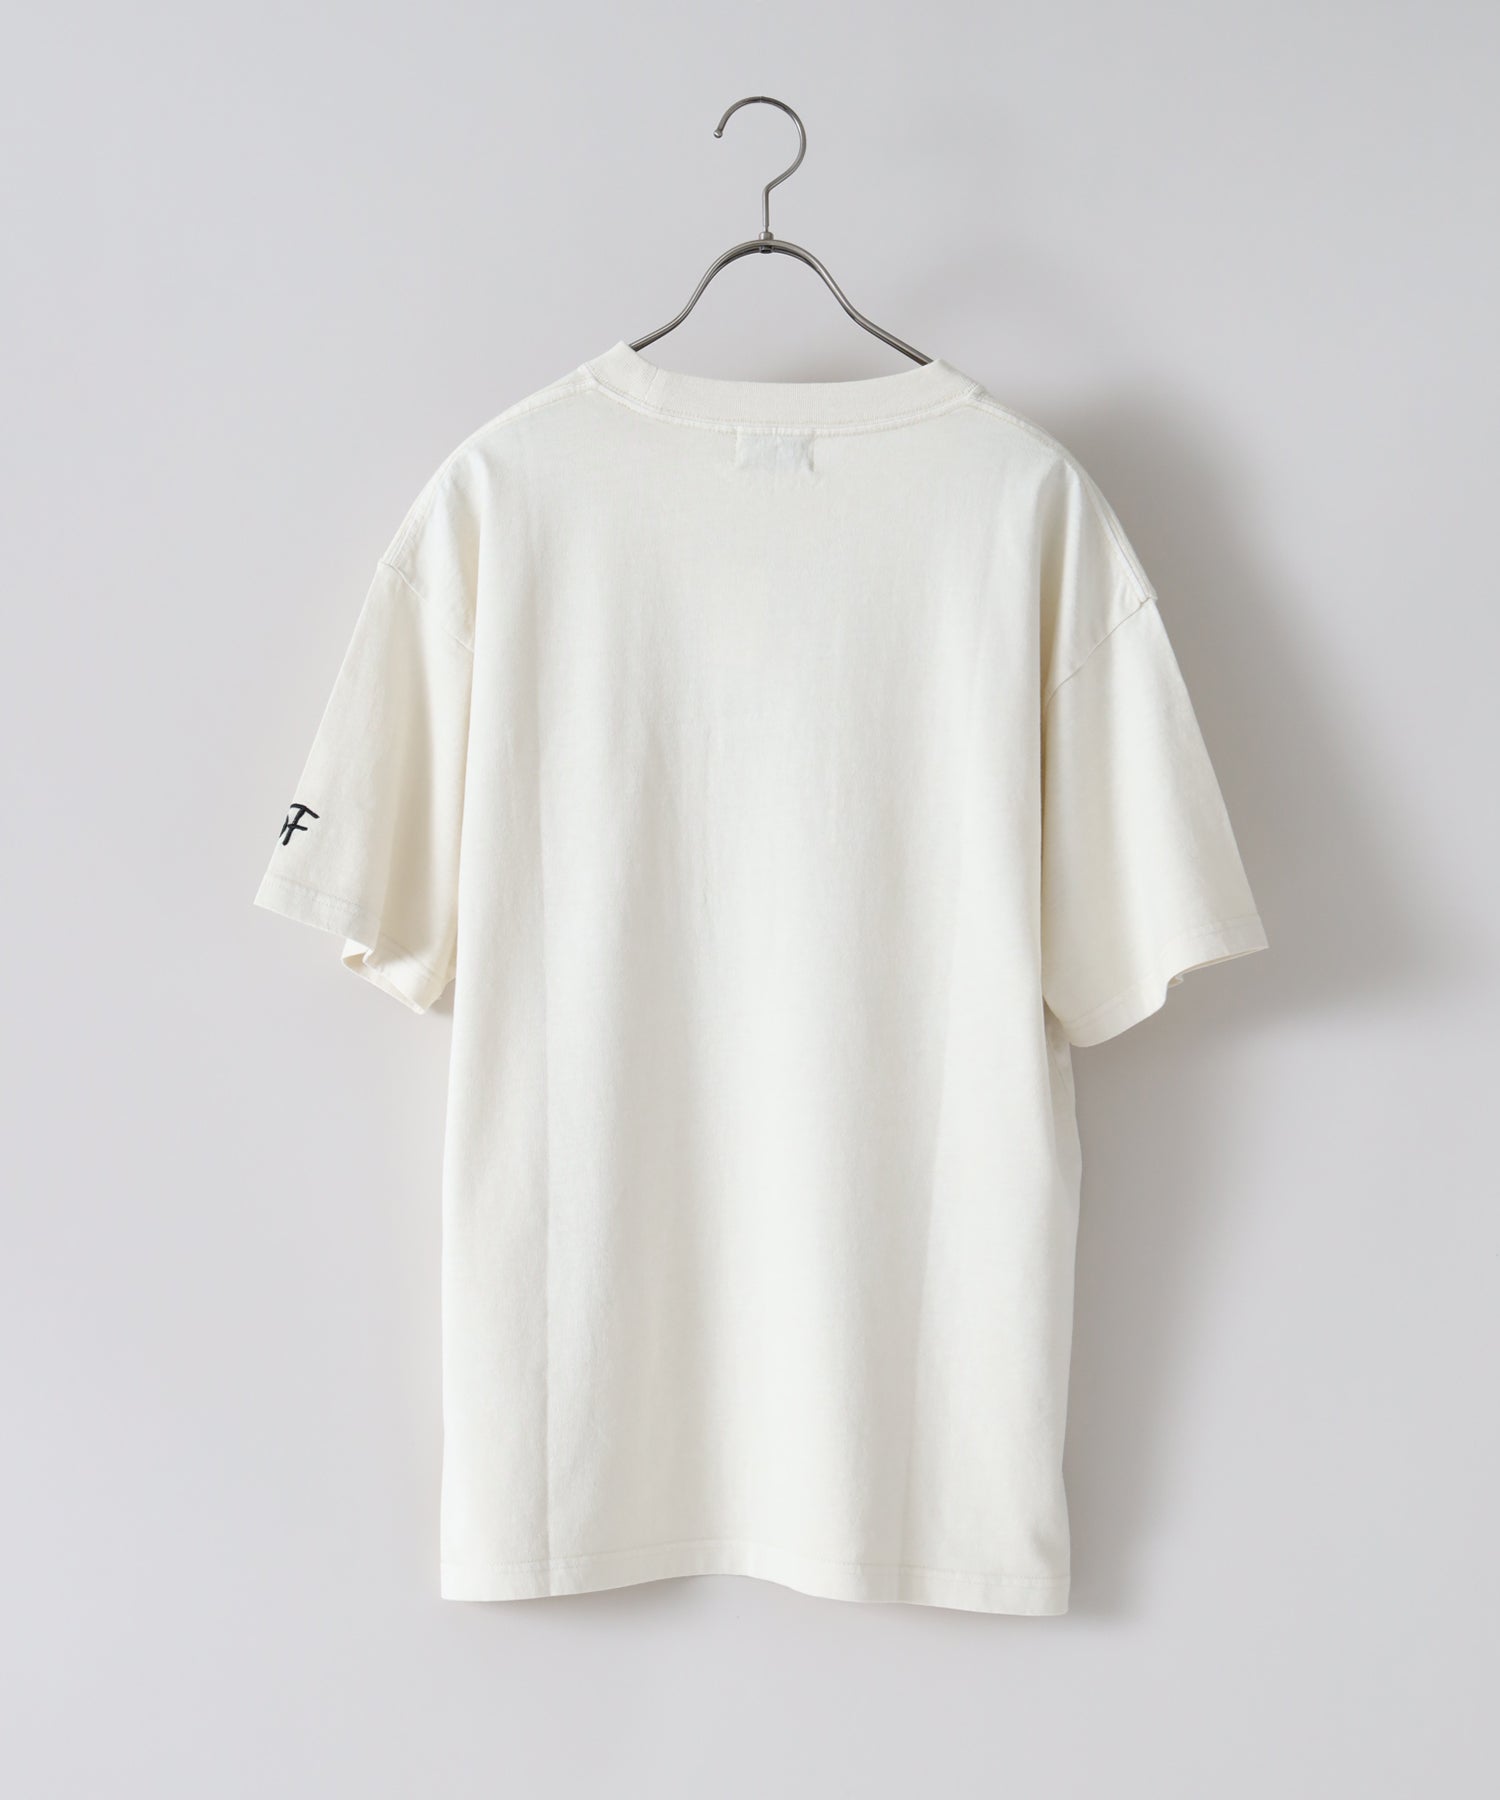 【FFEIN】ヴィンテージライクロゴ刺繍ポケットTシャツ / オフホワイト